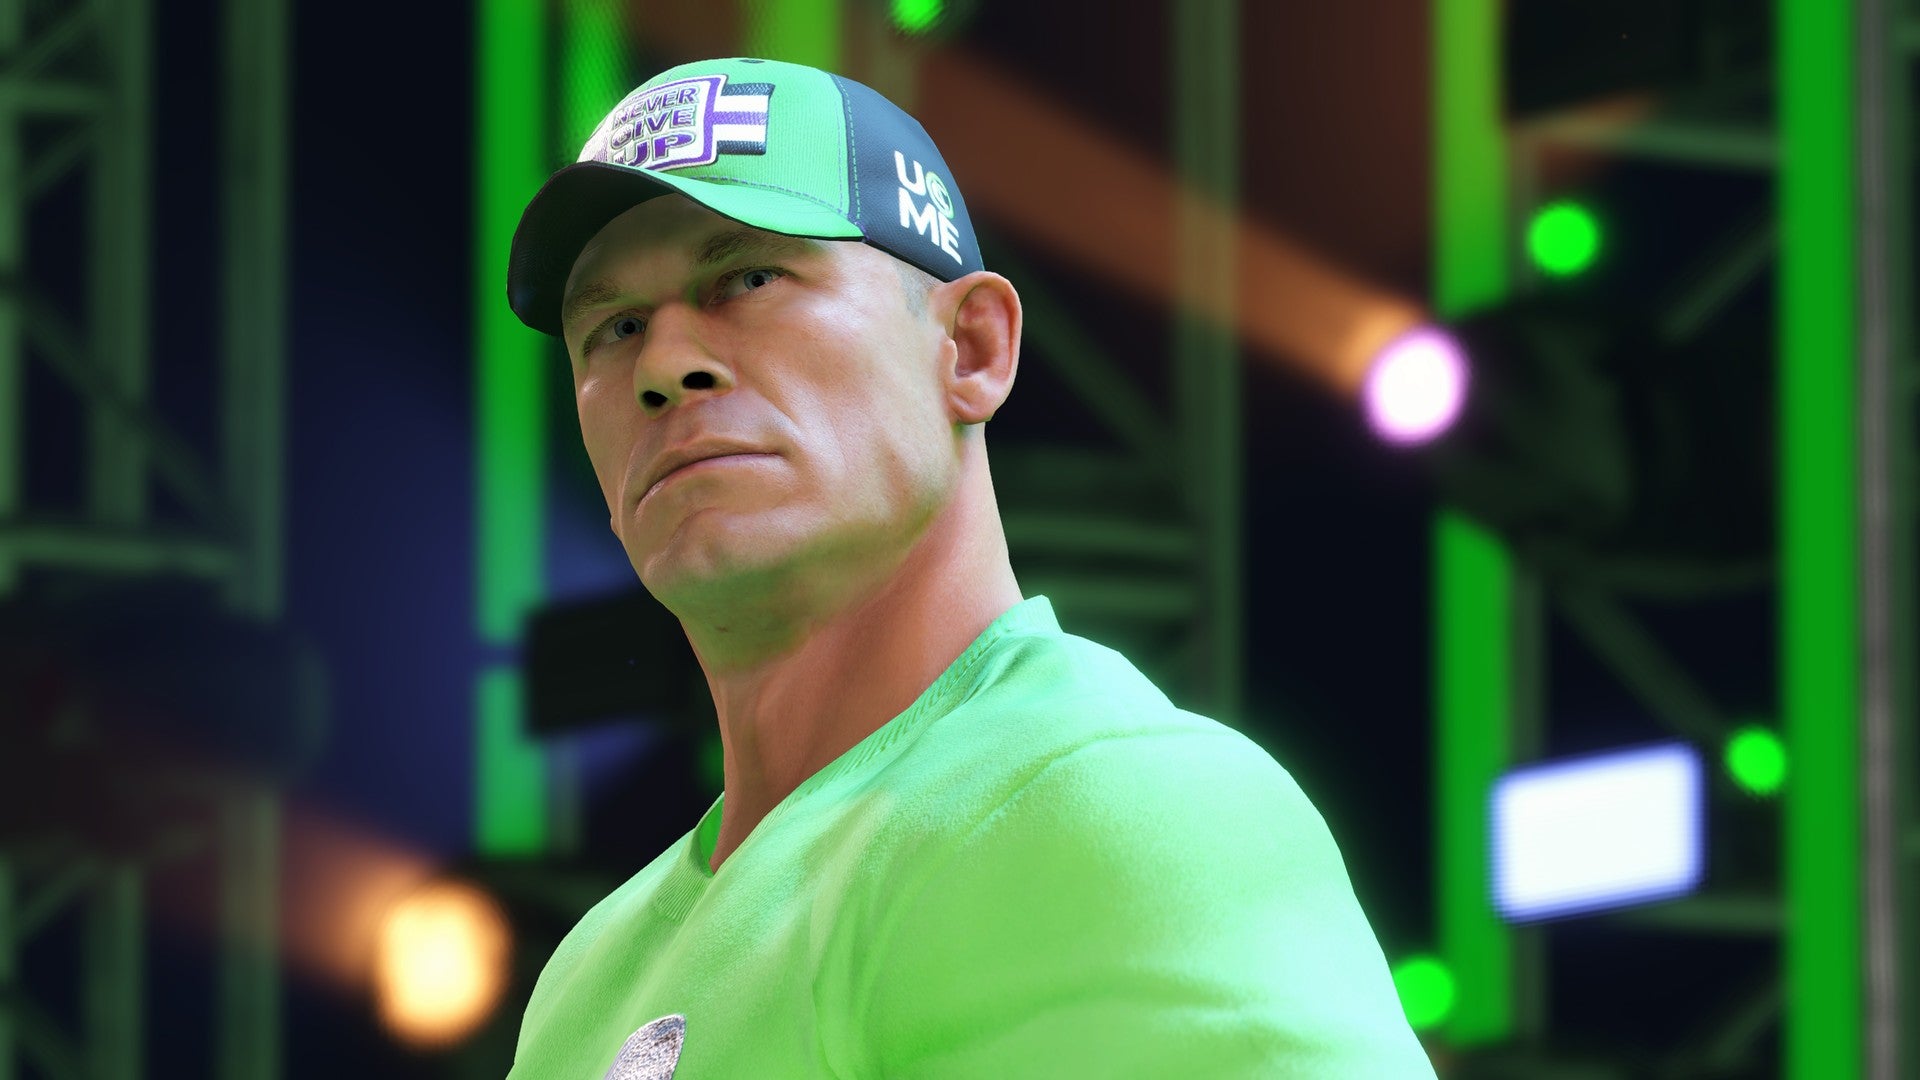 WWE 2K23 Cross-Gen Cuenta Compartida Xbox One Xbox Series